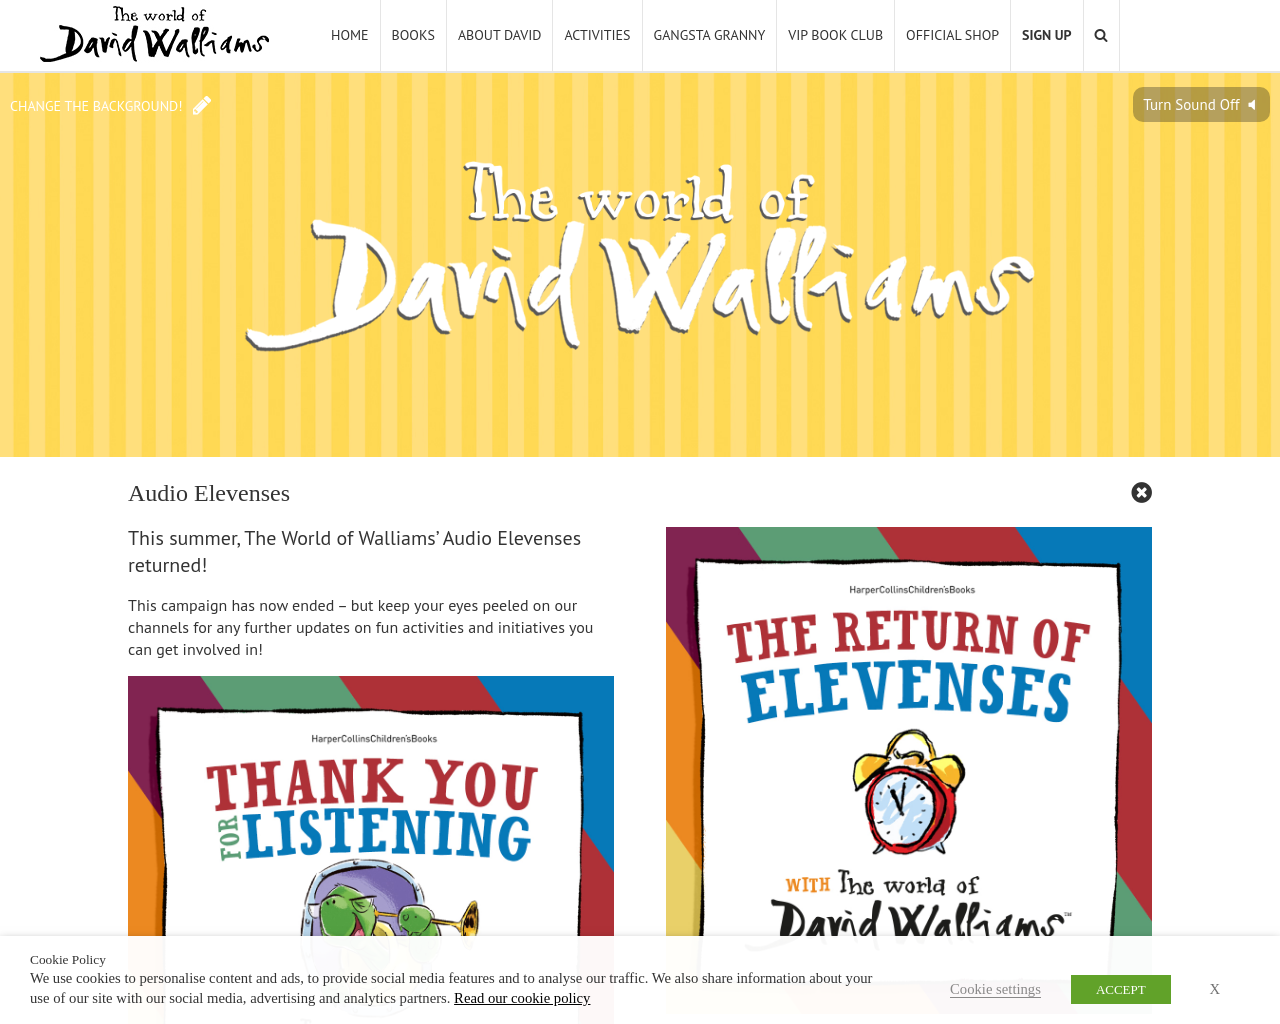 David Williams books